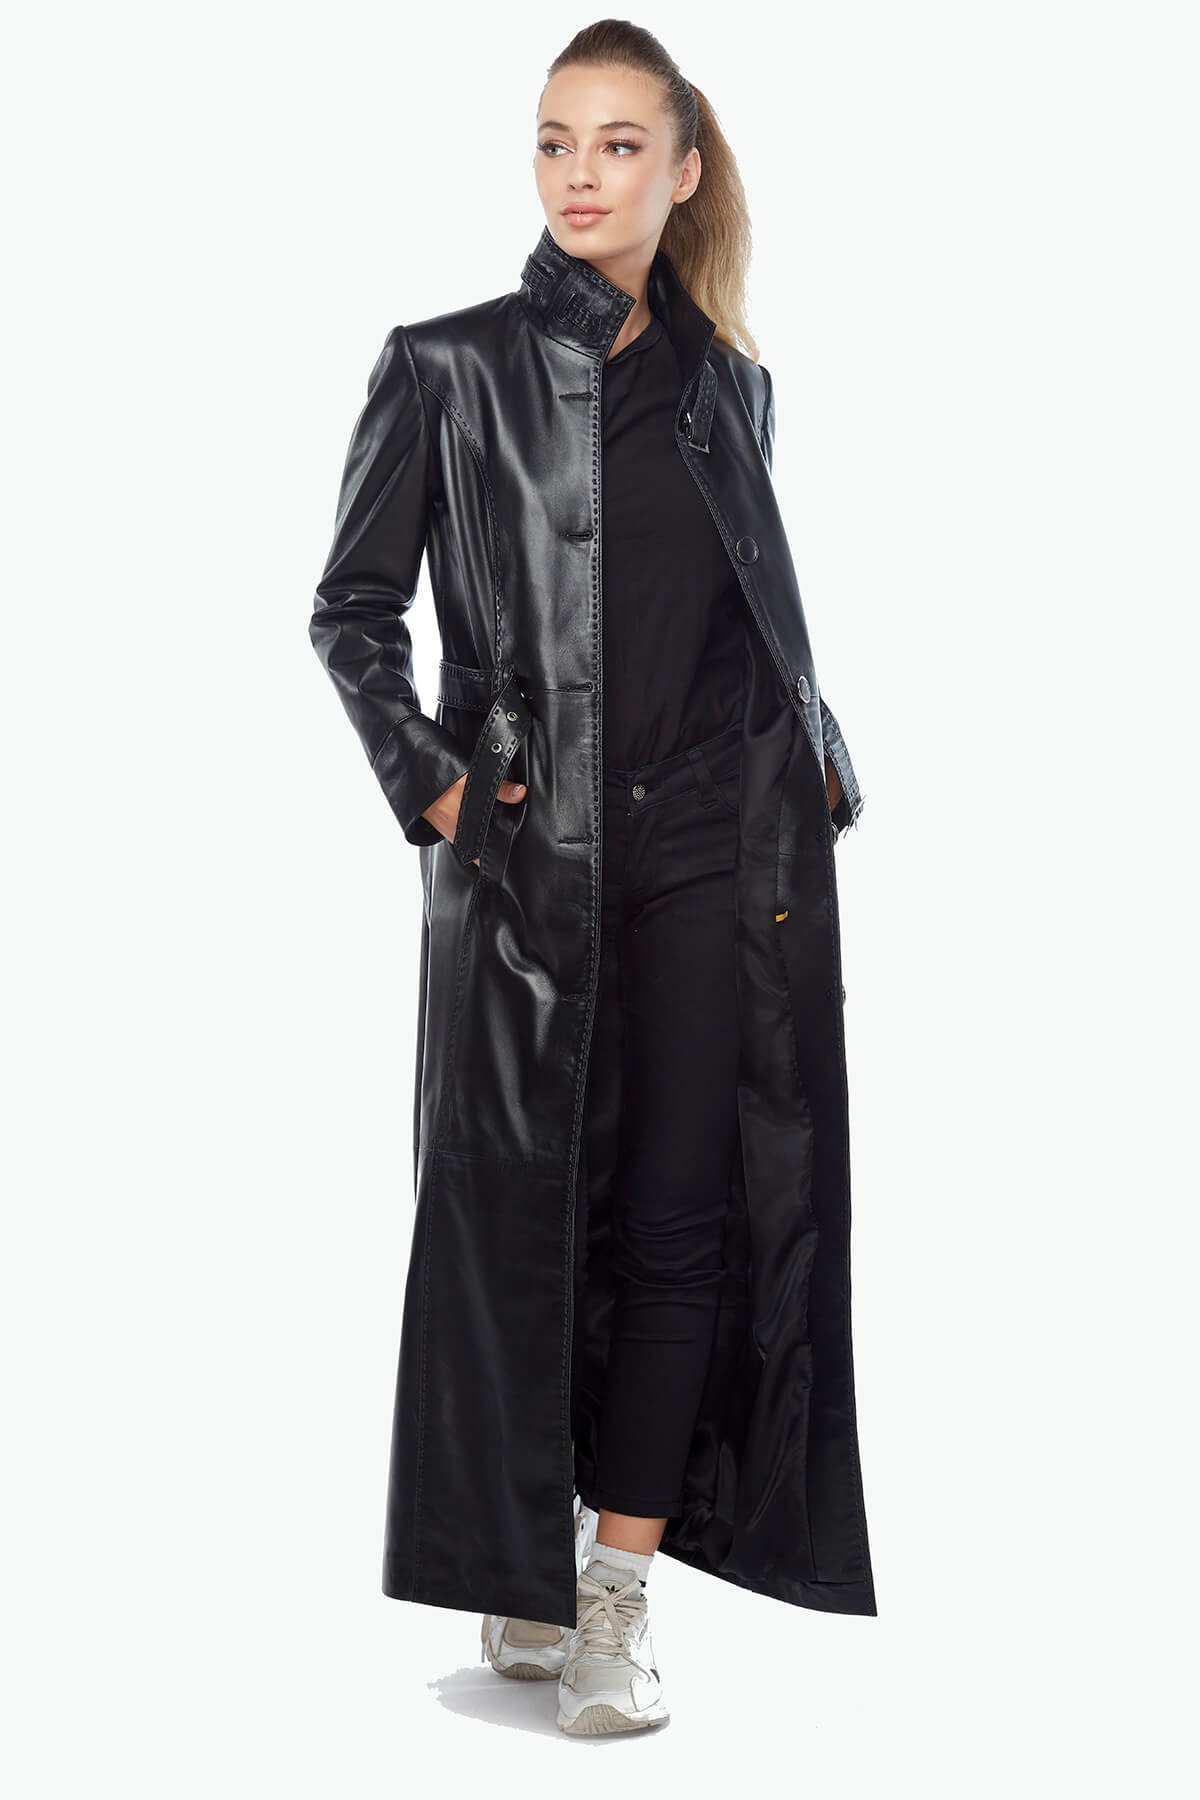 Genuine Leather Women's Topcoat Black